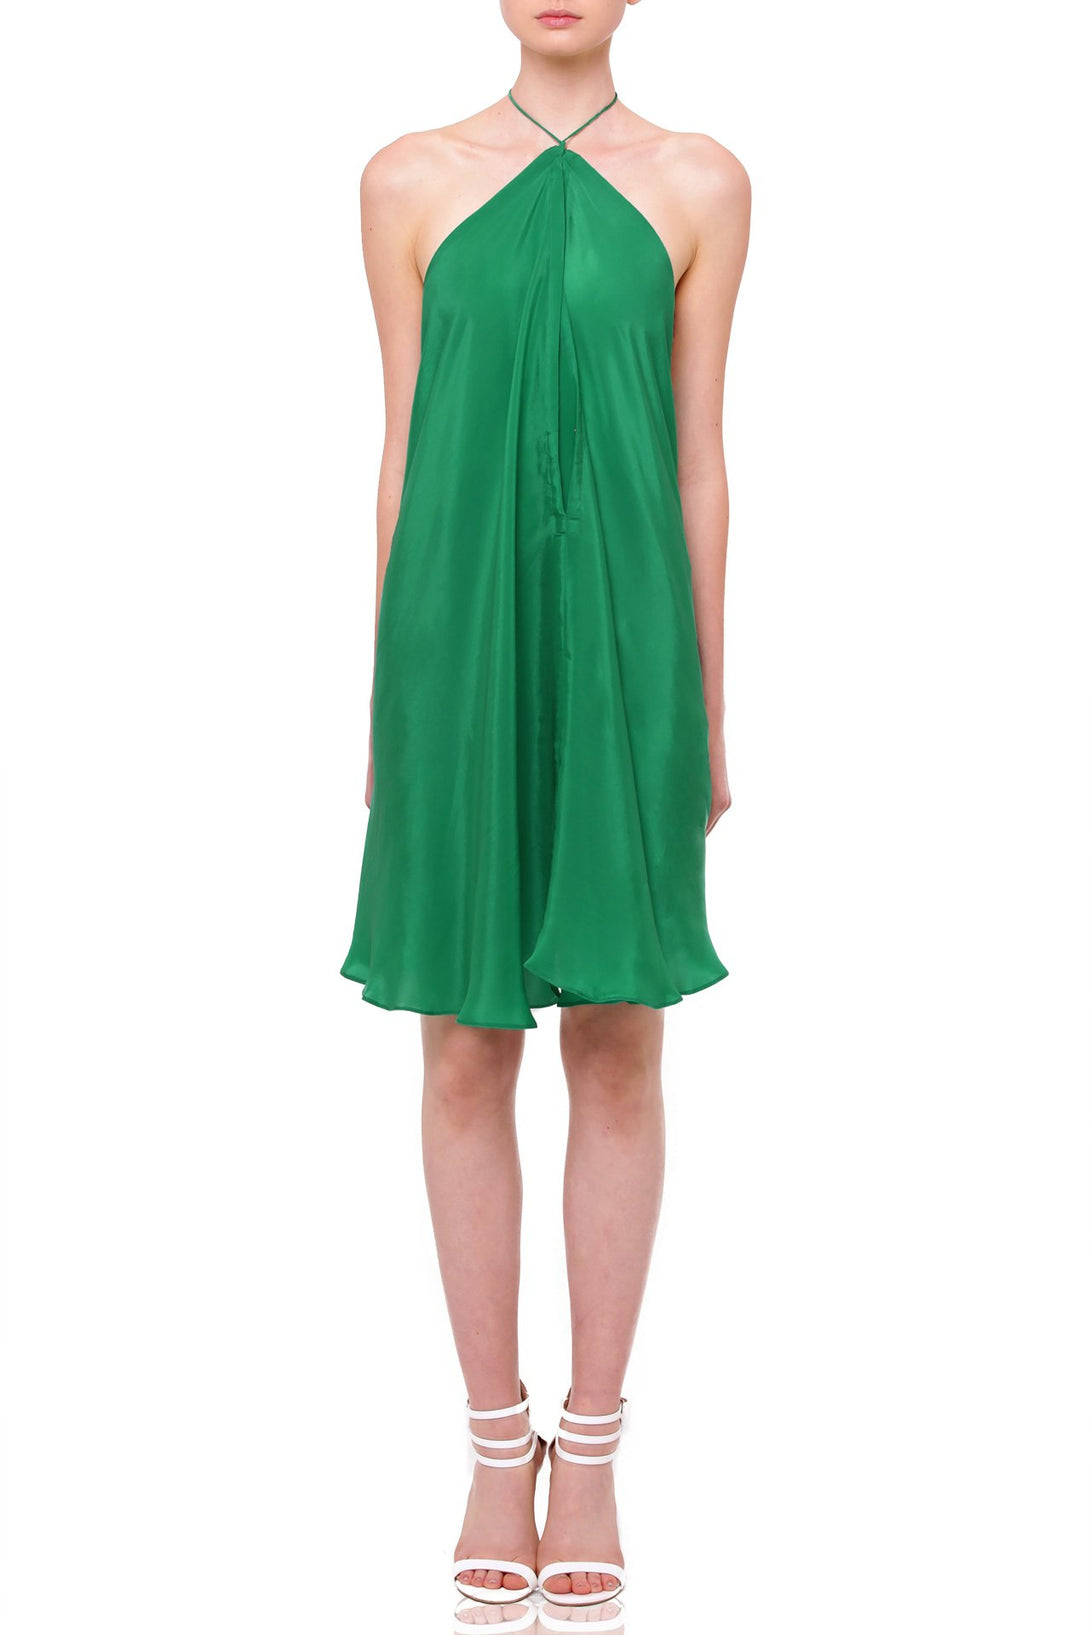  green dress mini dress, Shahida Parides, cute mini dresses, short sleeveless summer dresses,